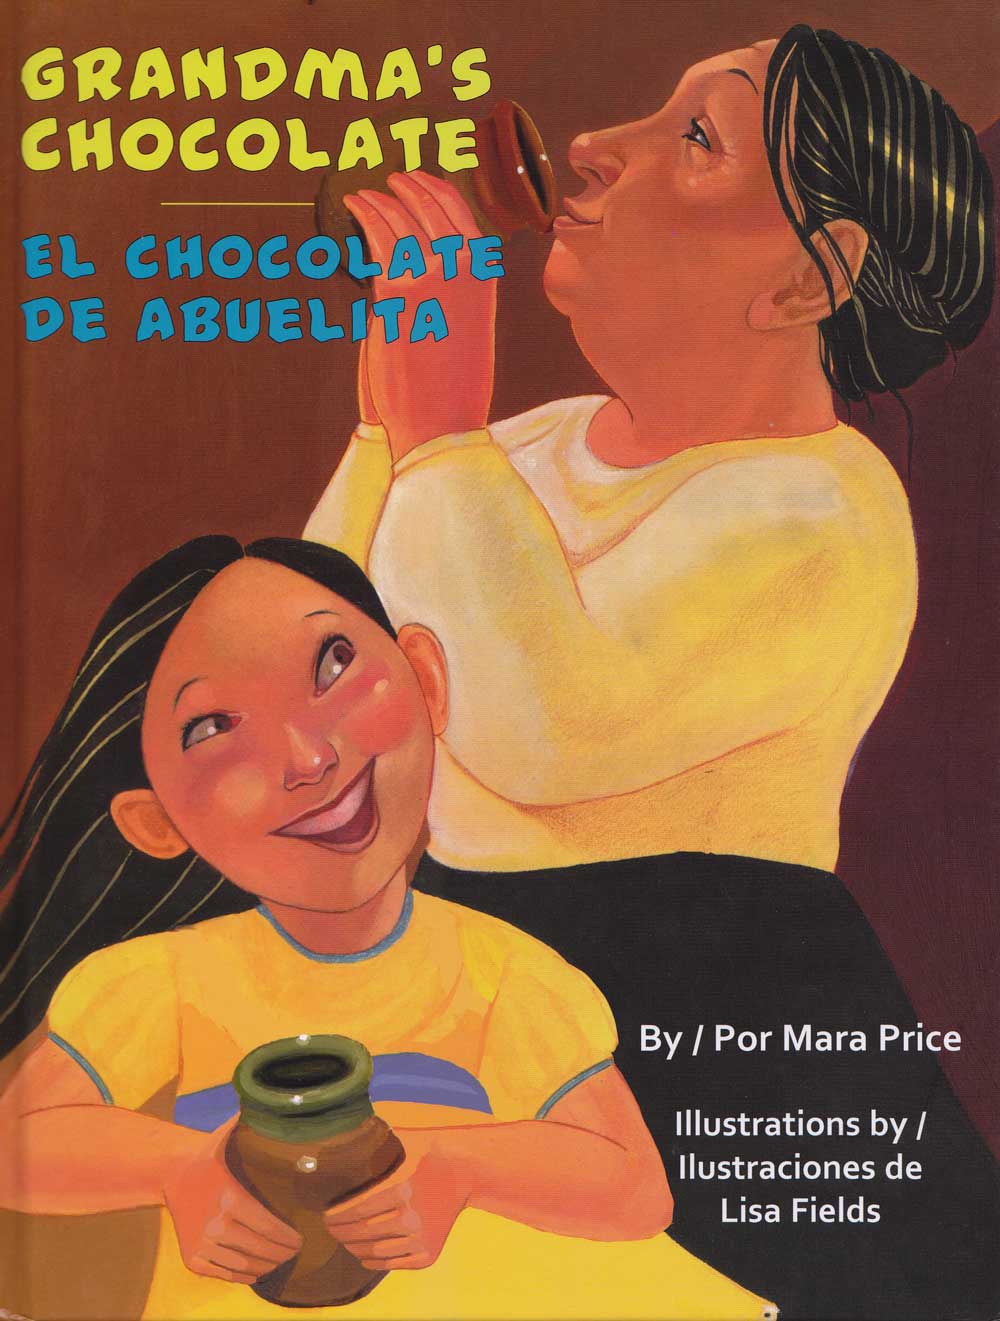 El chocolate de abuelita - Grandmas Chocolate, Del Sol Books